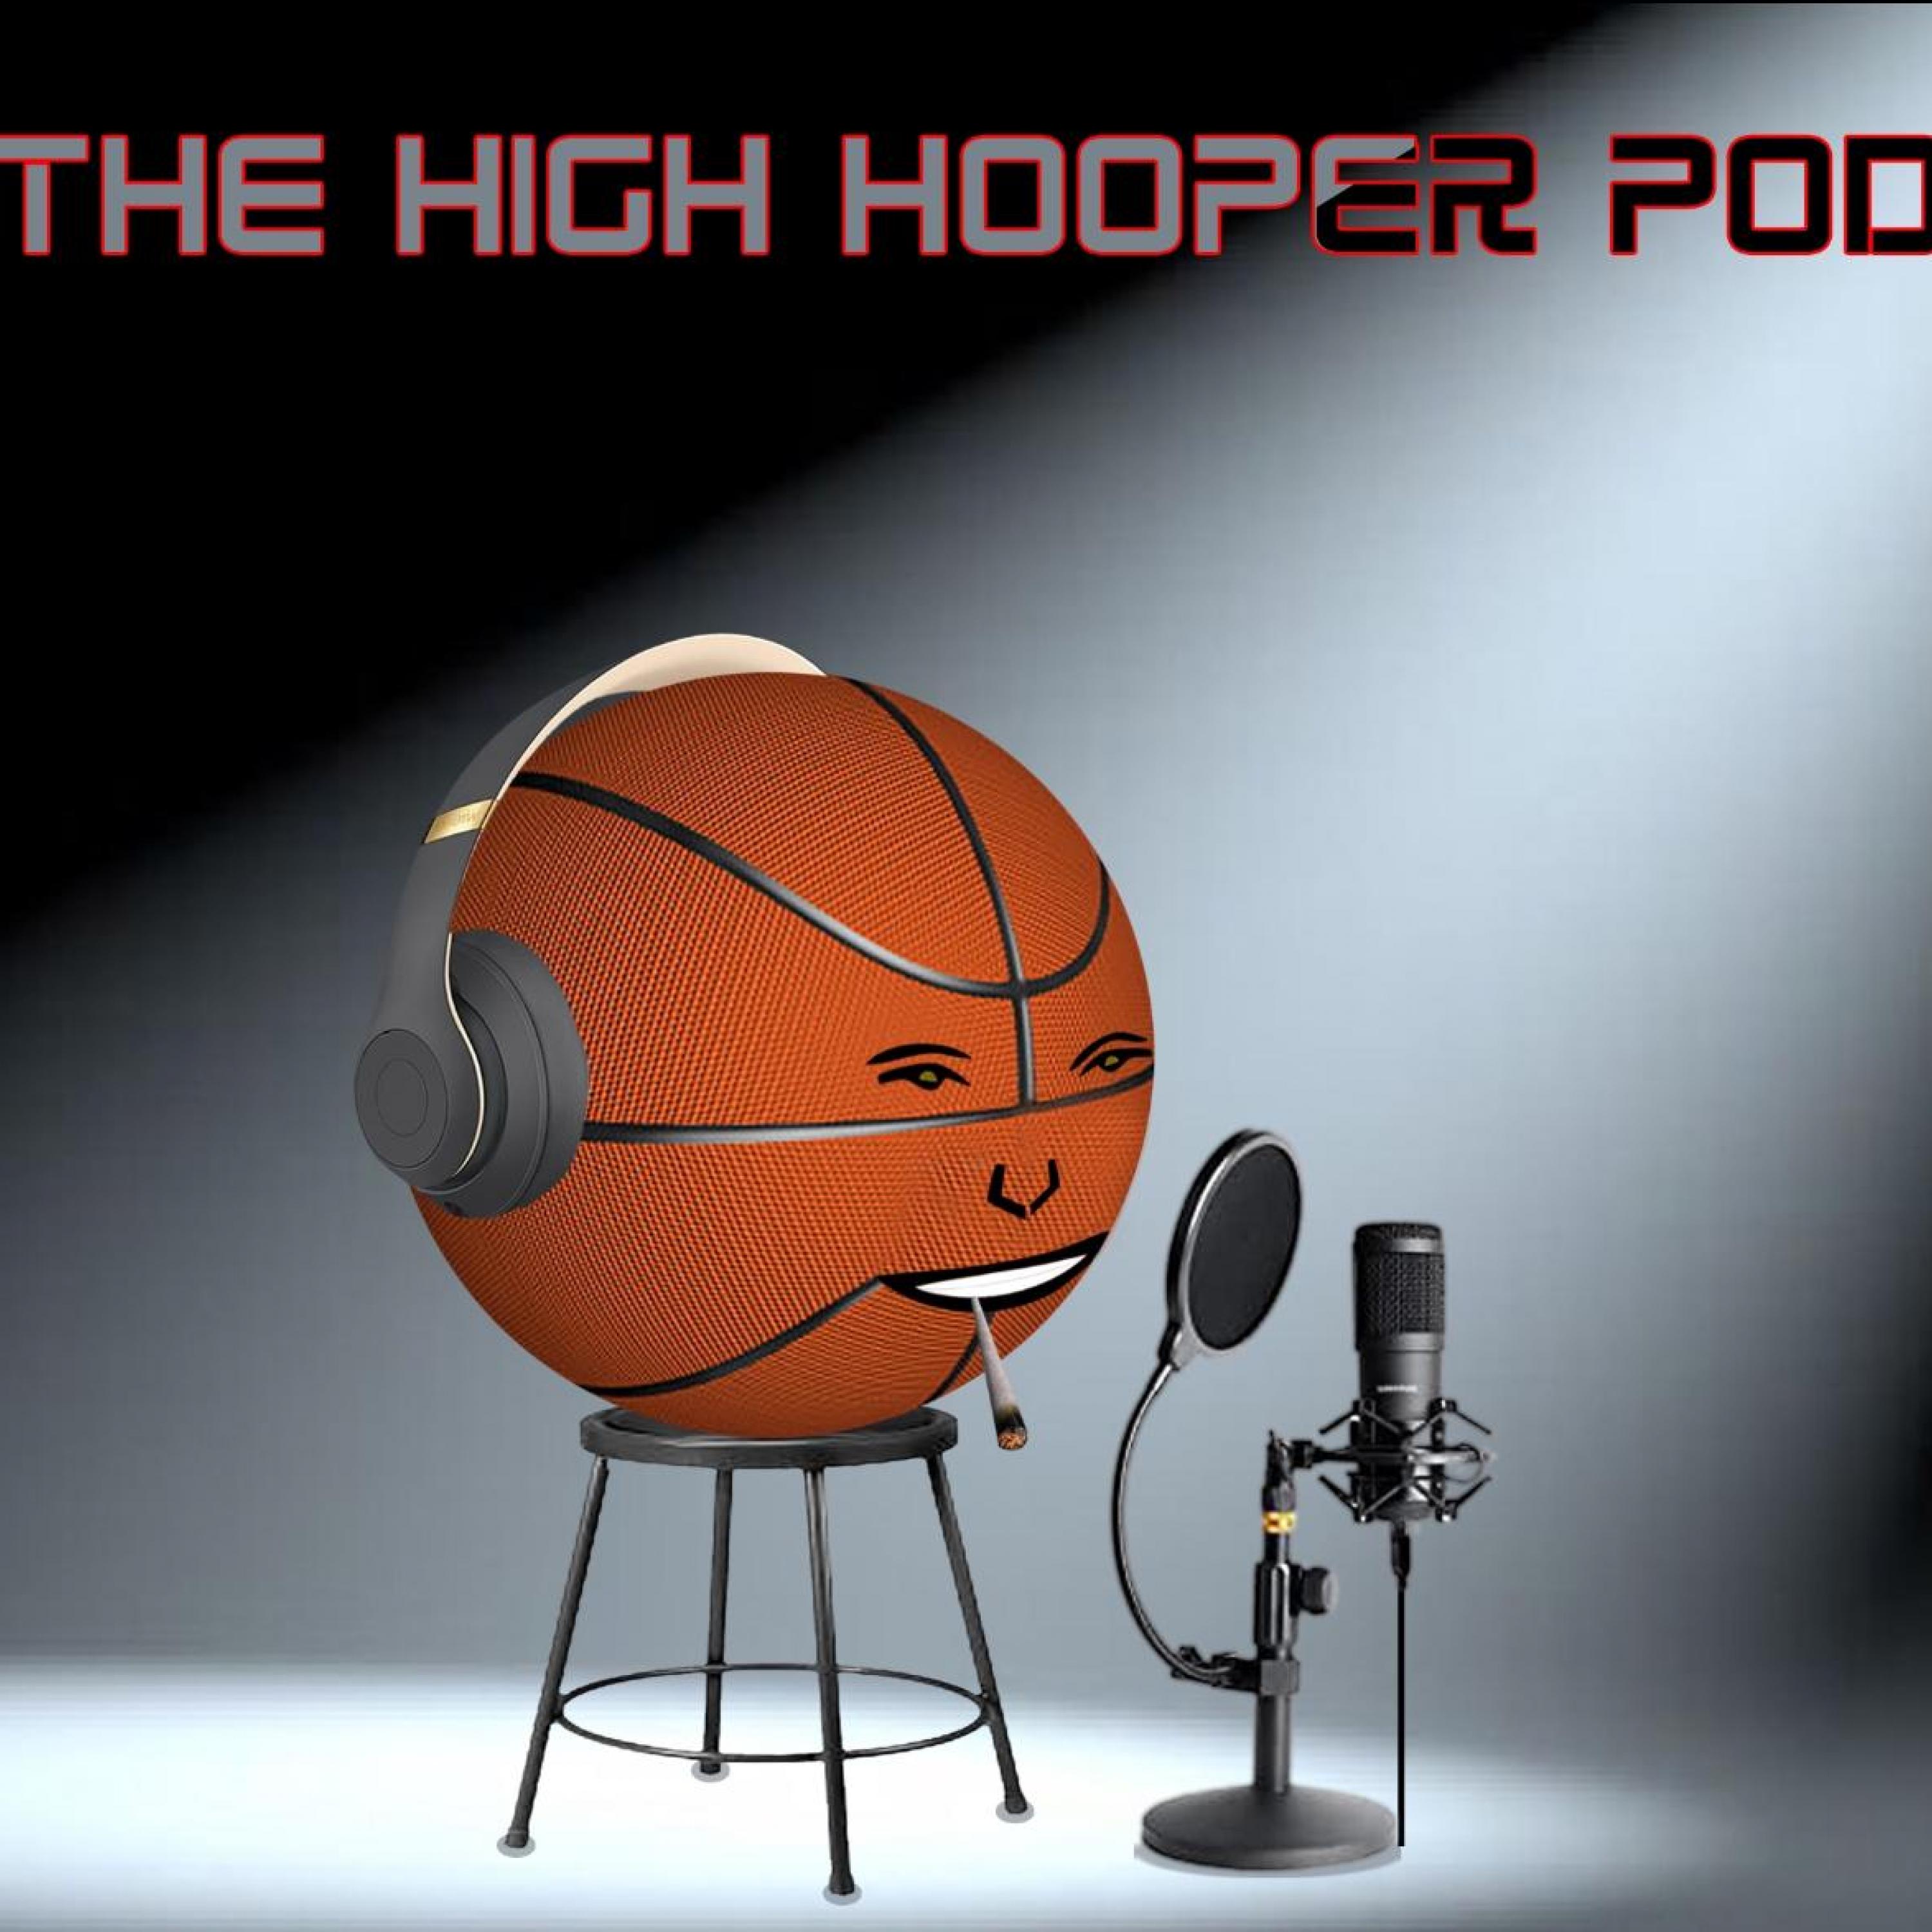 The High Hooper Pod